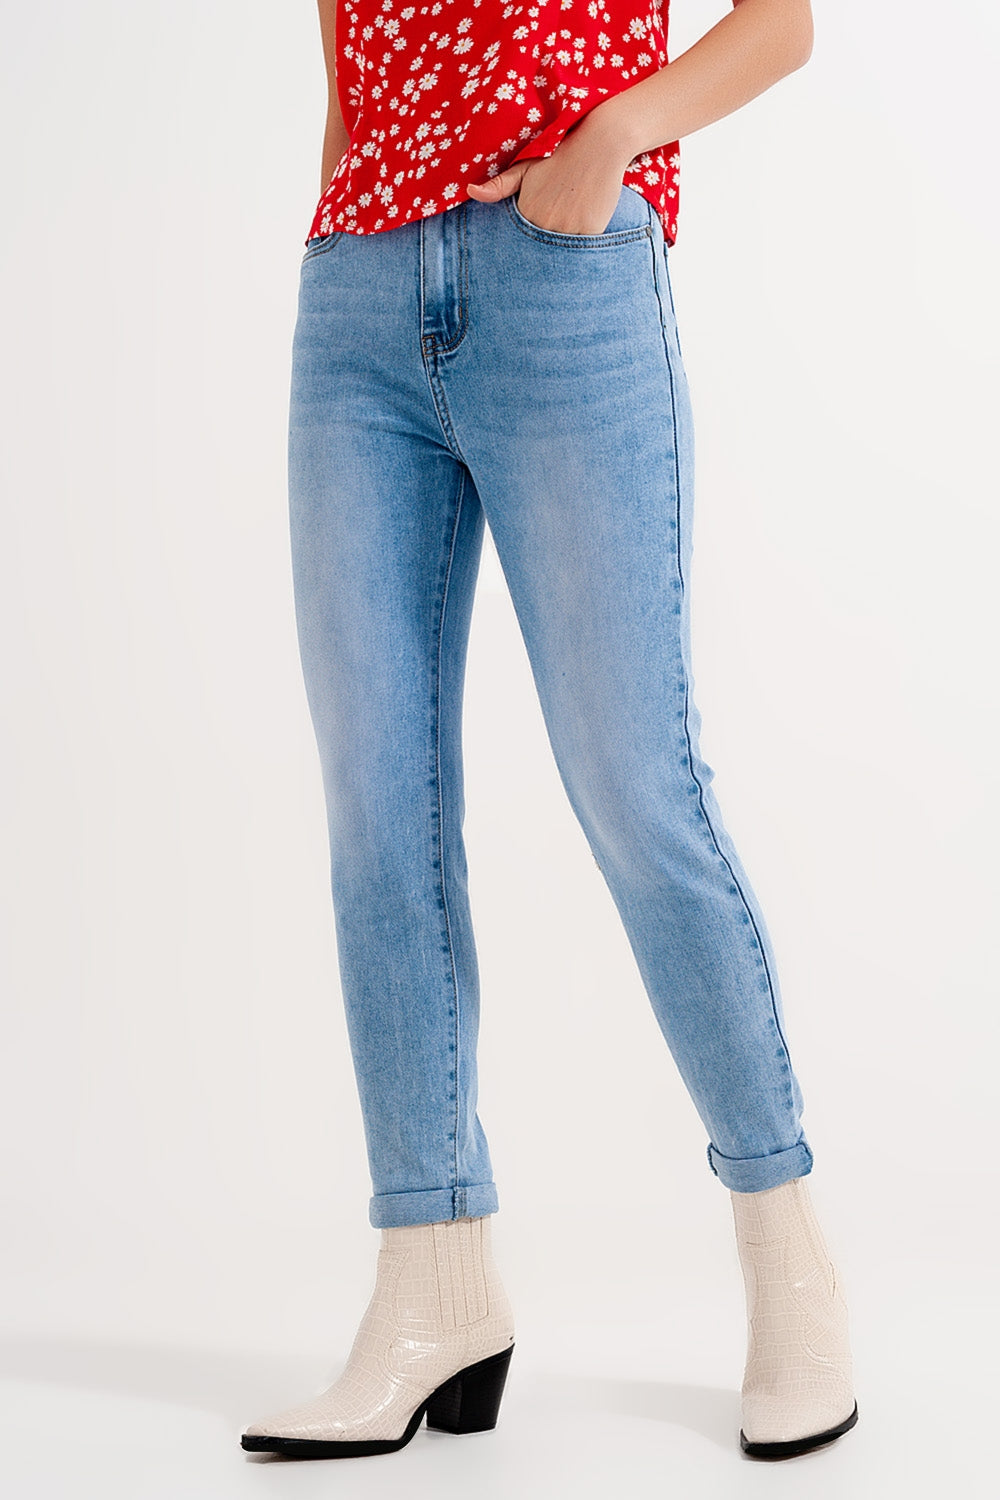 High waist skinny jeans in light blue